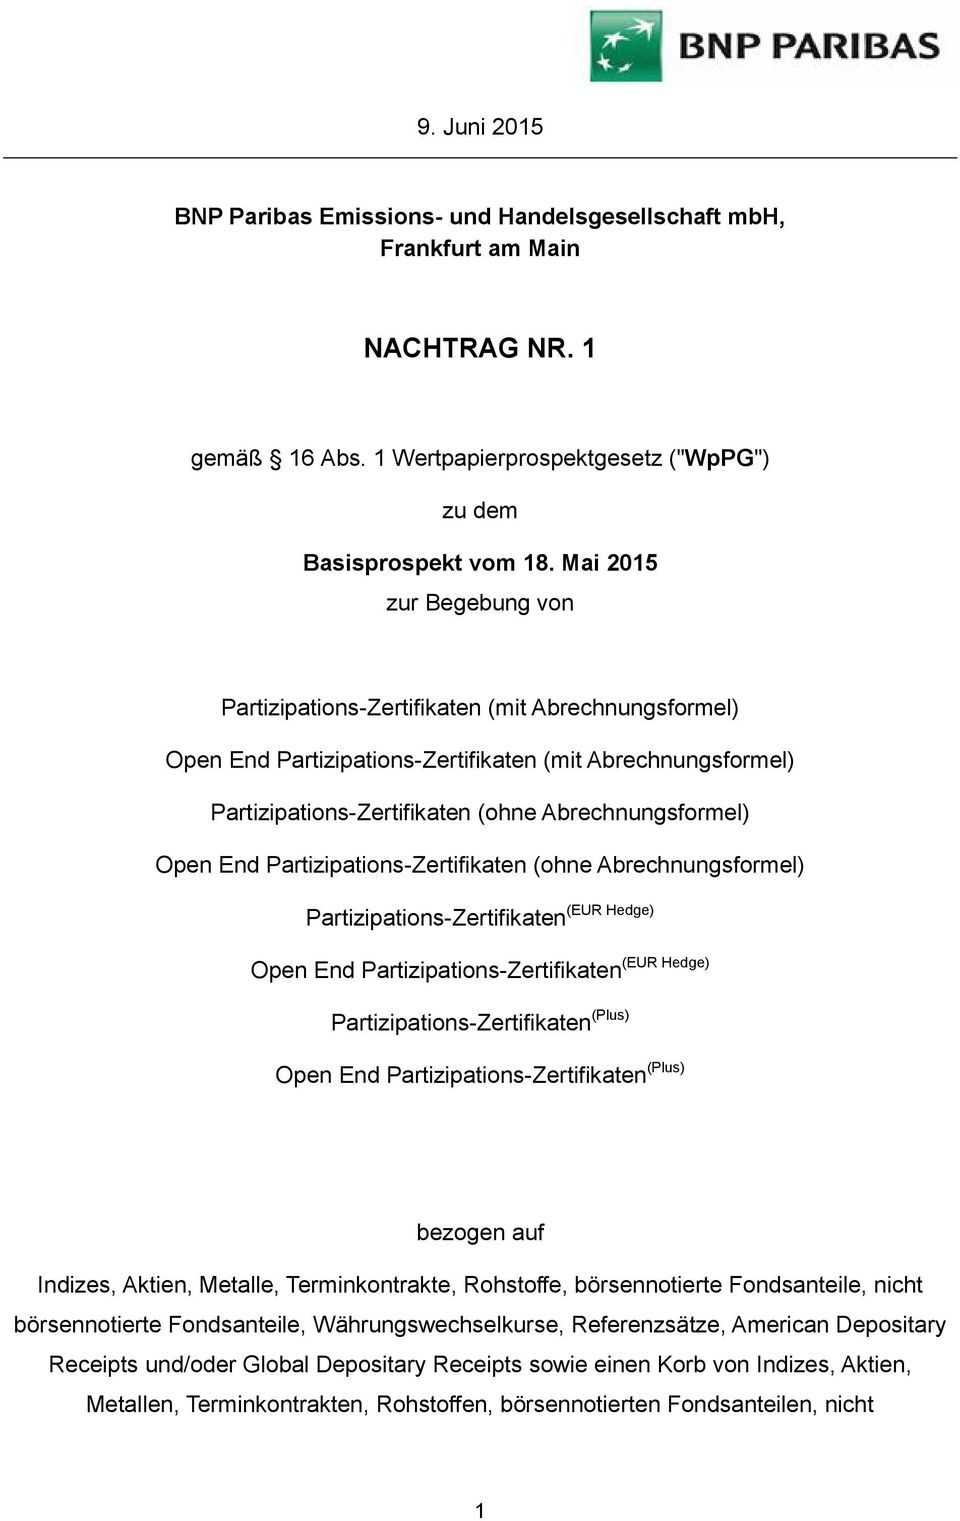 End Partizipations-Zertifikaten (ohne Abrechnungsformel) (EUR Hedge) Partizipations-Zertifikaten (EUR Hedge) Open End Partizipations-Zertifikaten Partizipations-Zertifikaten (Plus) Open End